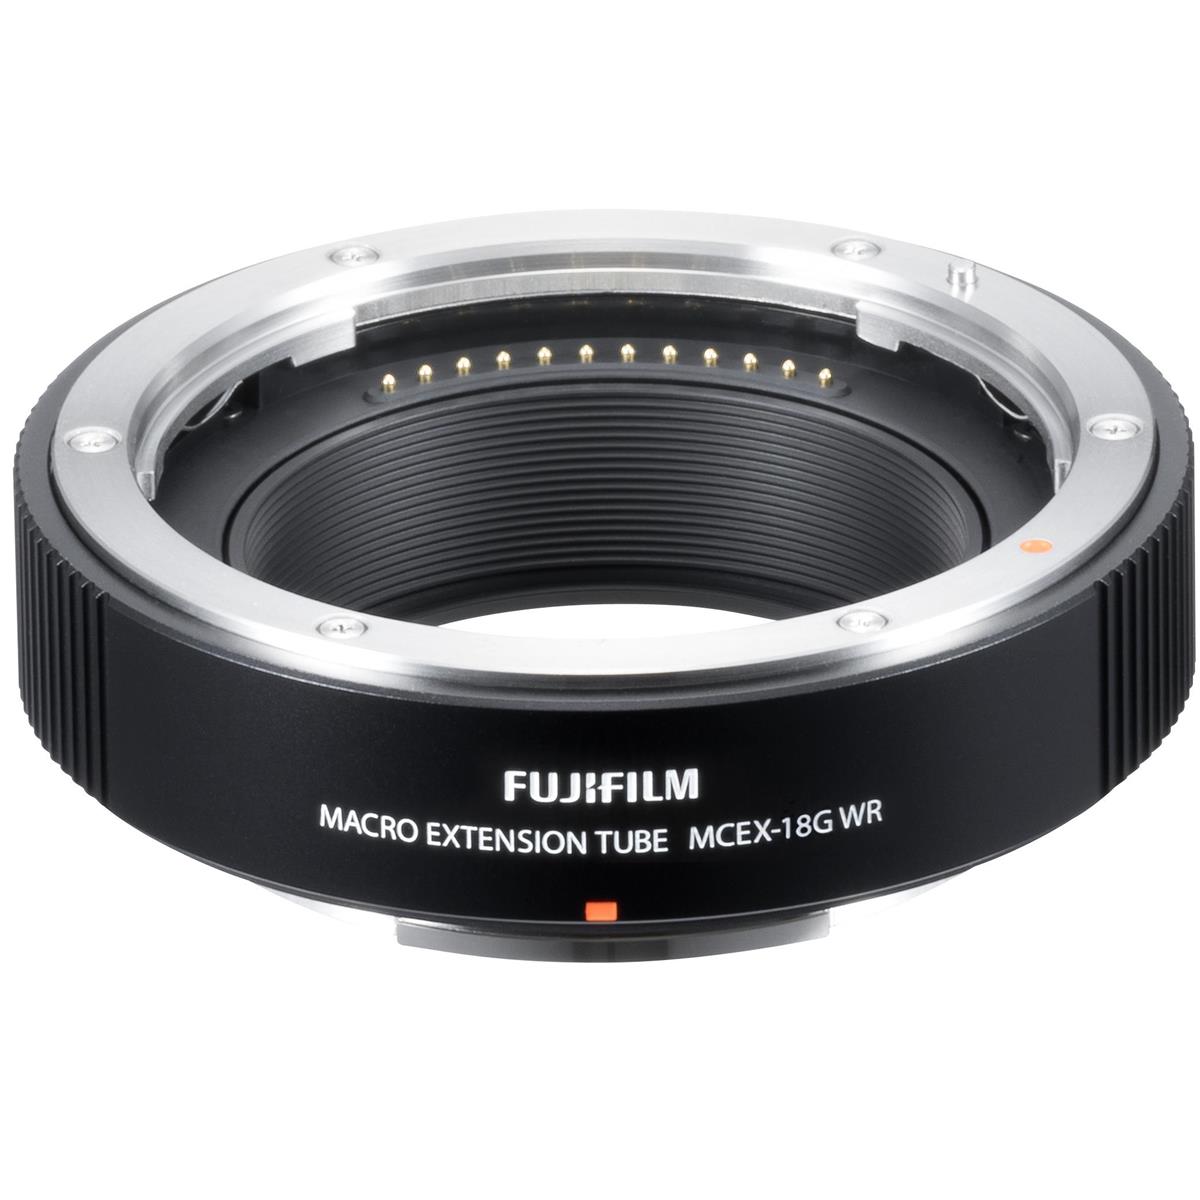 Fujifilm Gfx Macro Extension Tube For Gf Lenses 18mm Mcex 18g Wr